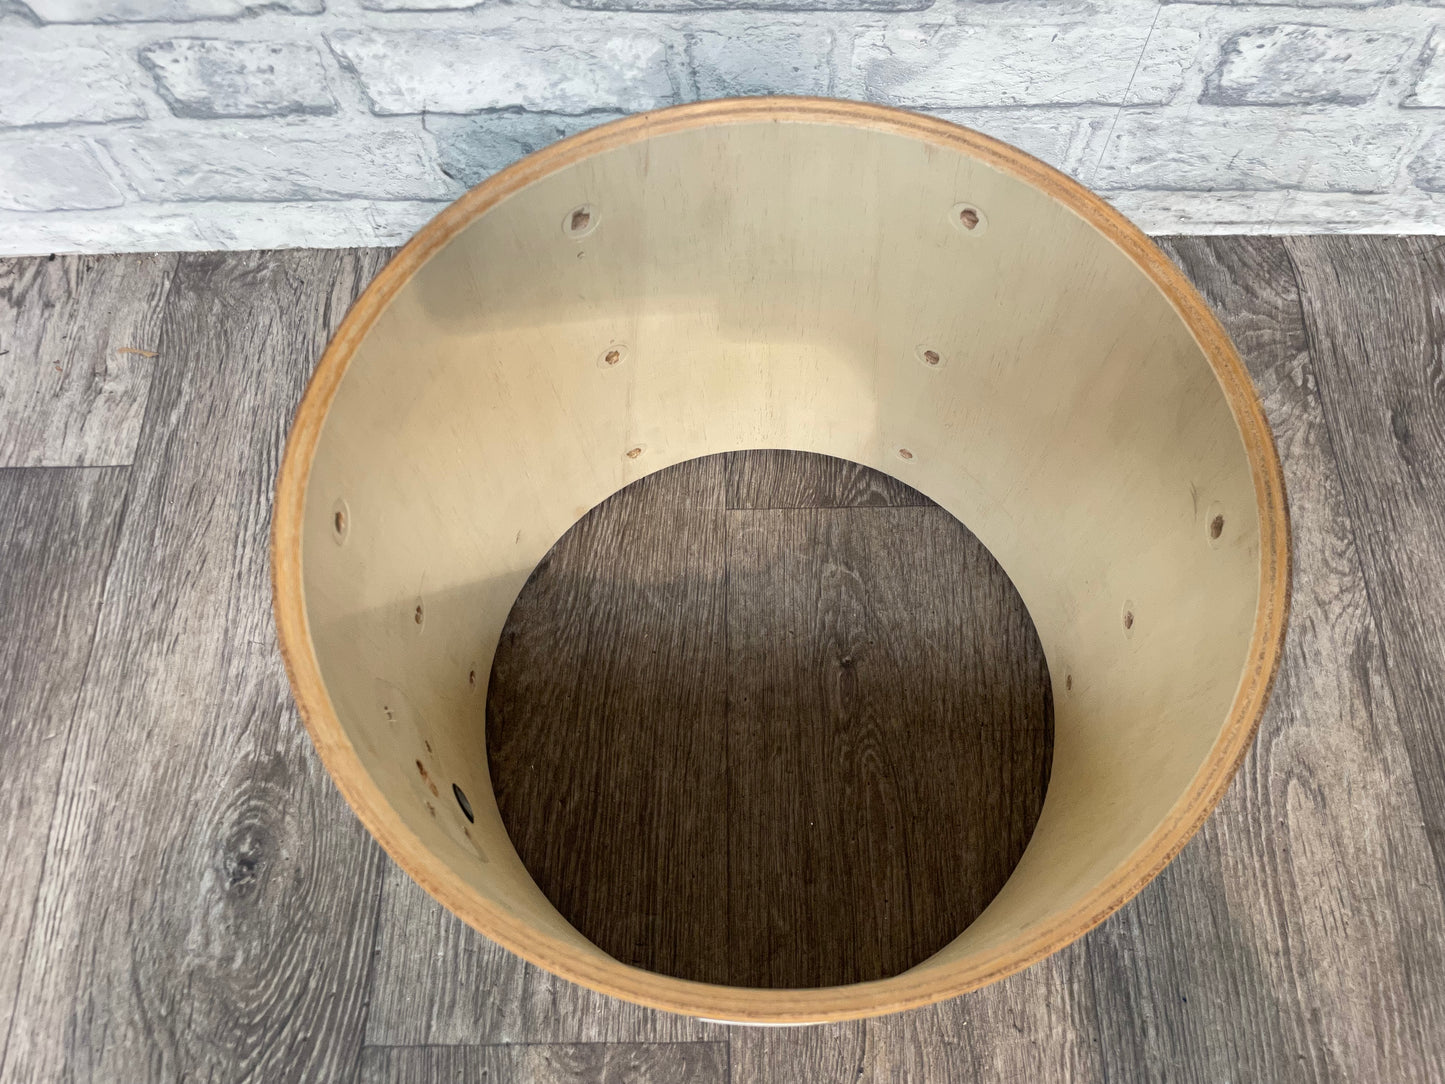 Yamaha Stage Custom Tom Drum Shell 12”x10” Bare Wood Project #IW31